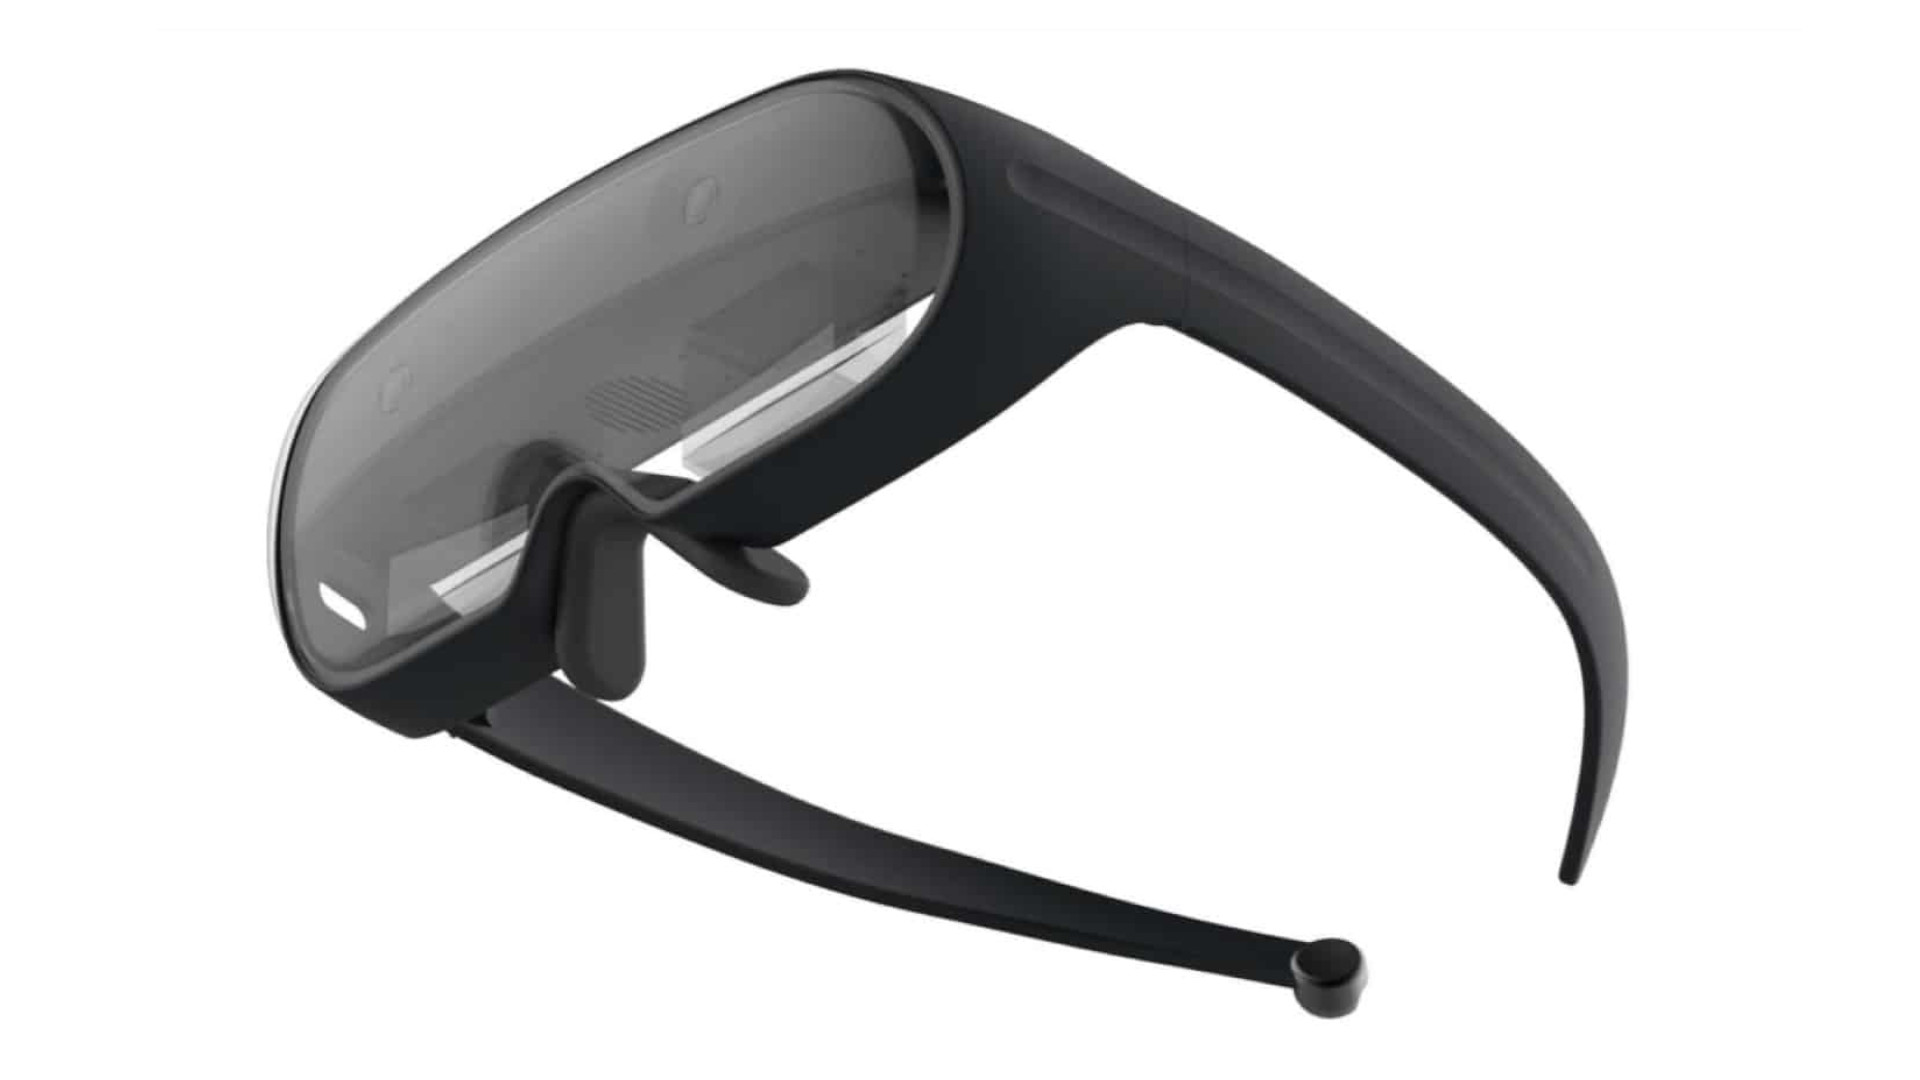 Samsung ar glasses patent render